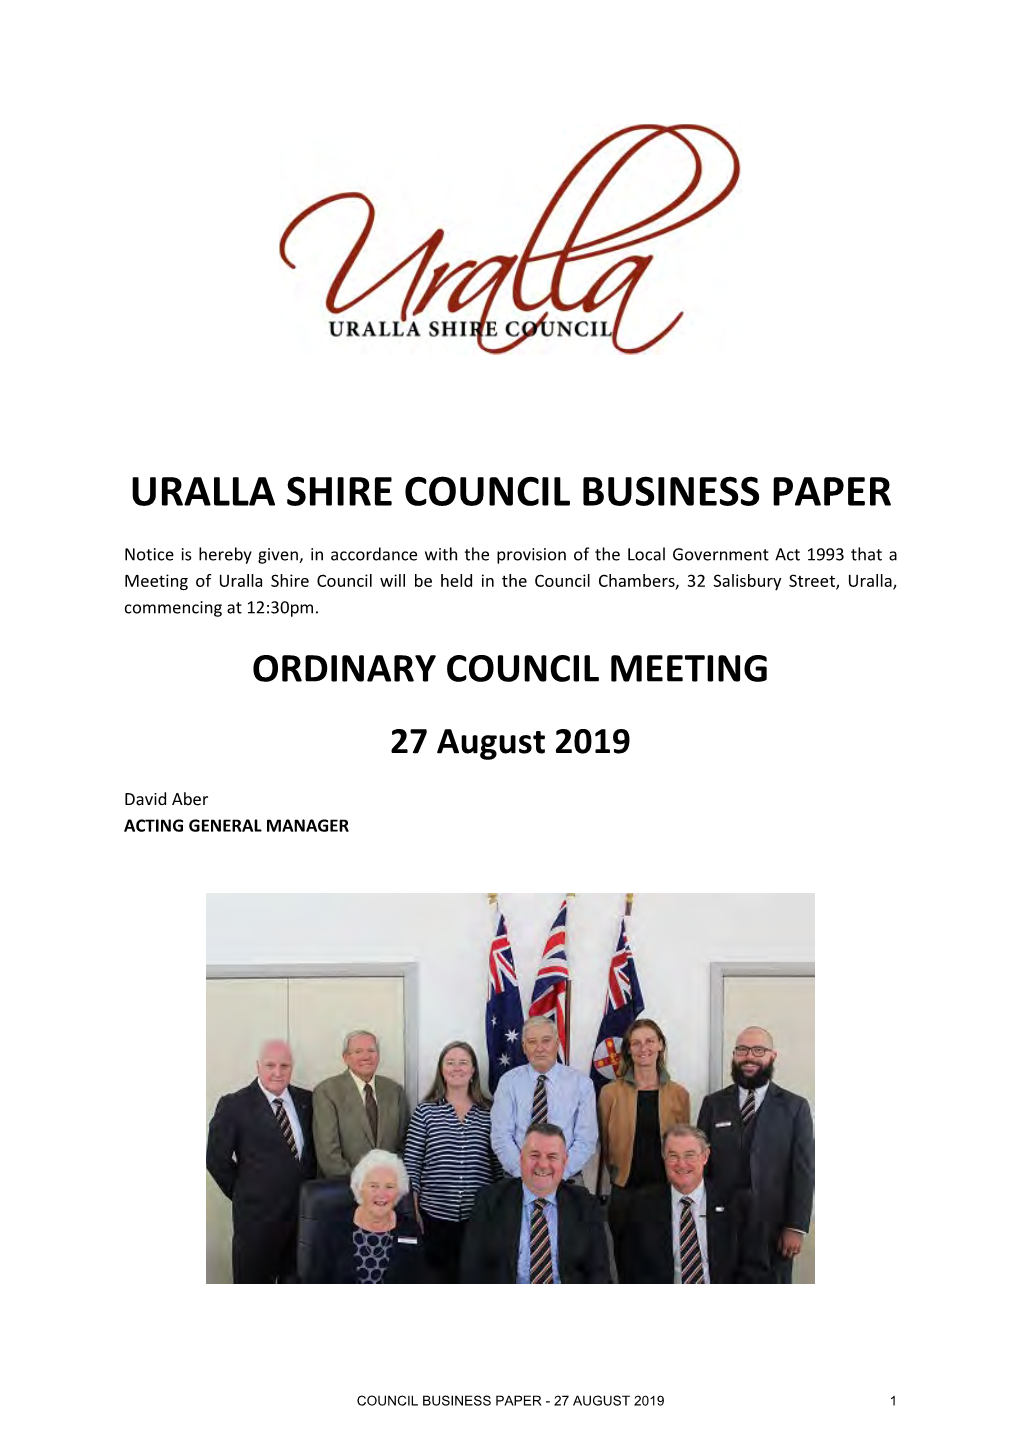 Uralla Shire Council Business Paper